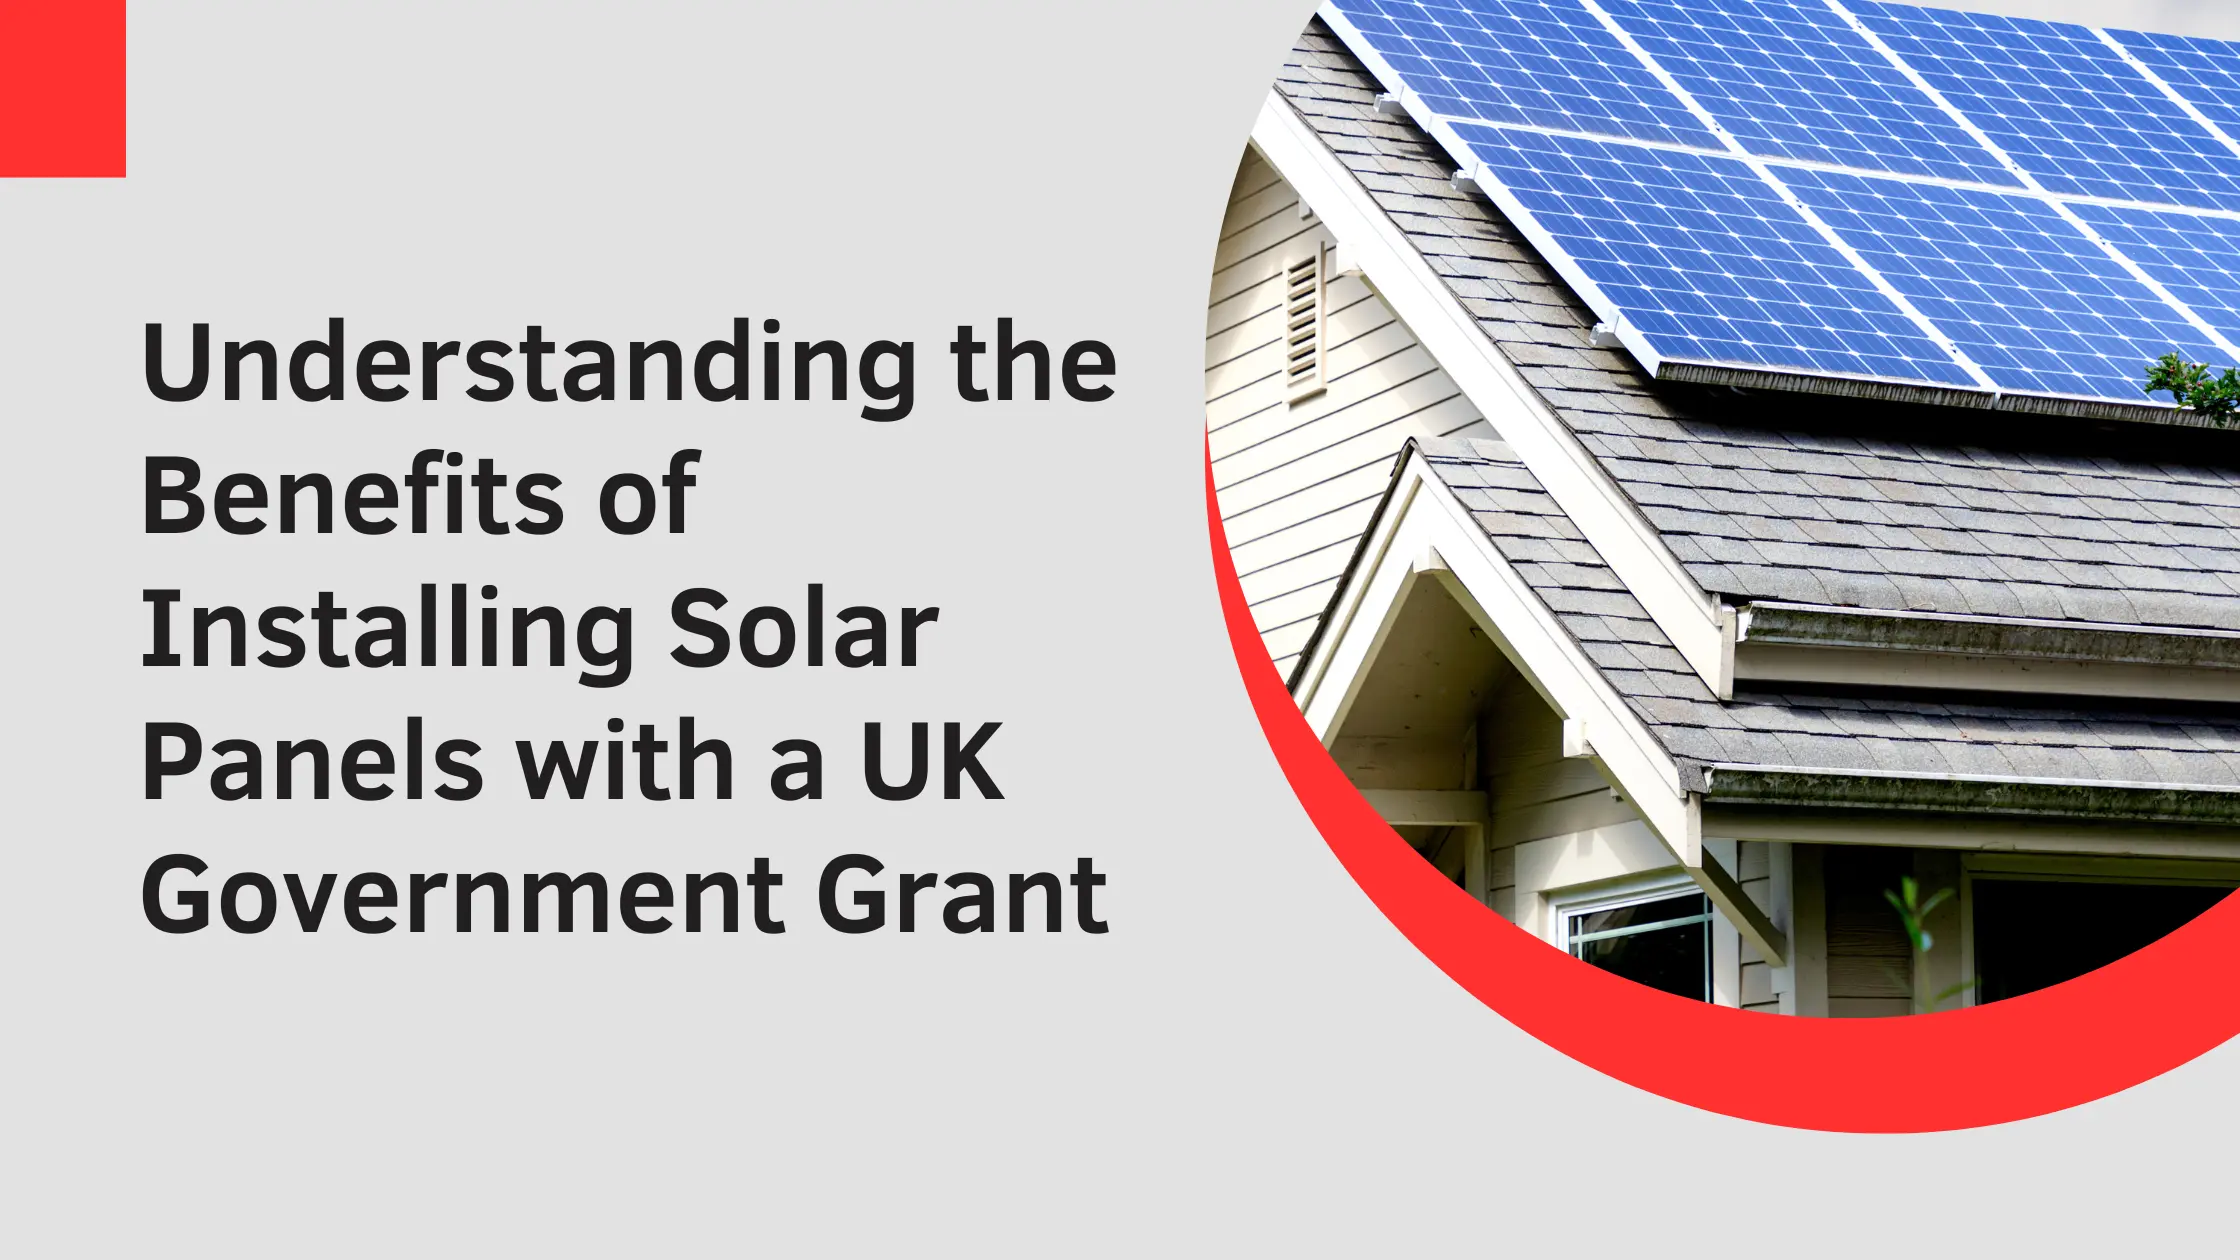 government solar panels program uk - Do you get paid for having solar panels UK